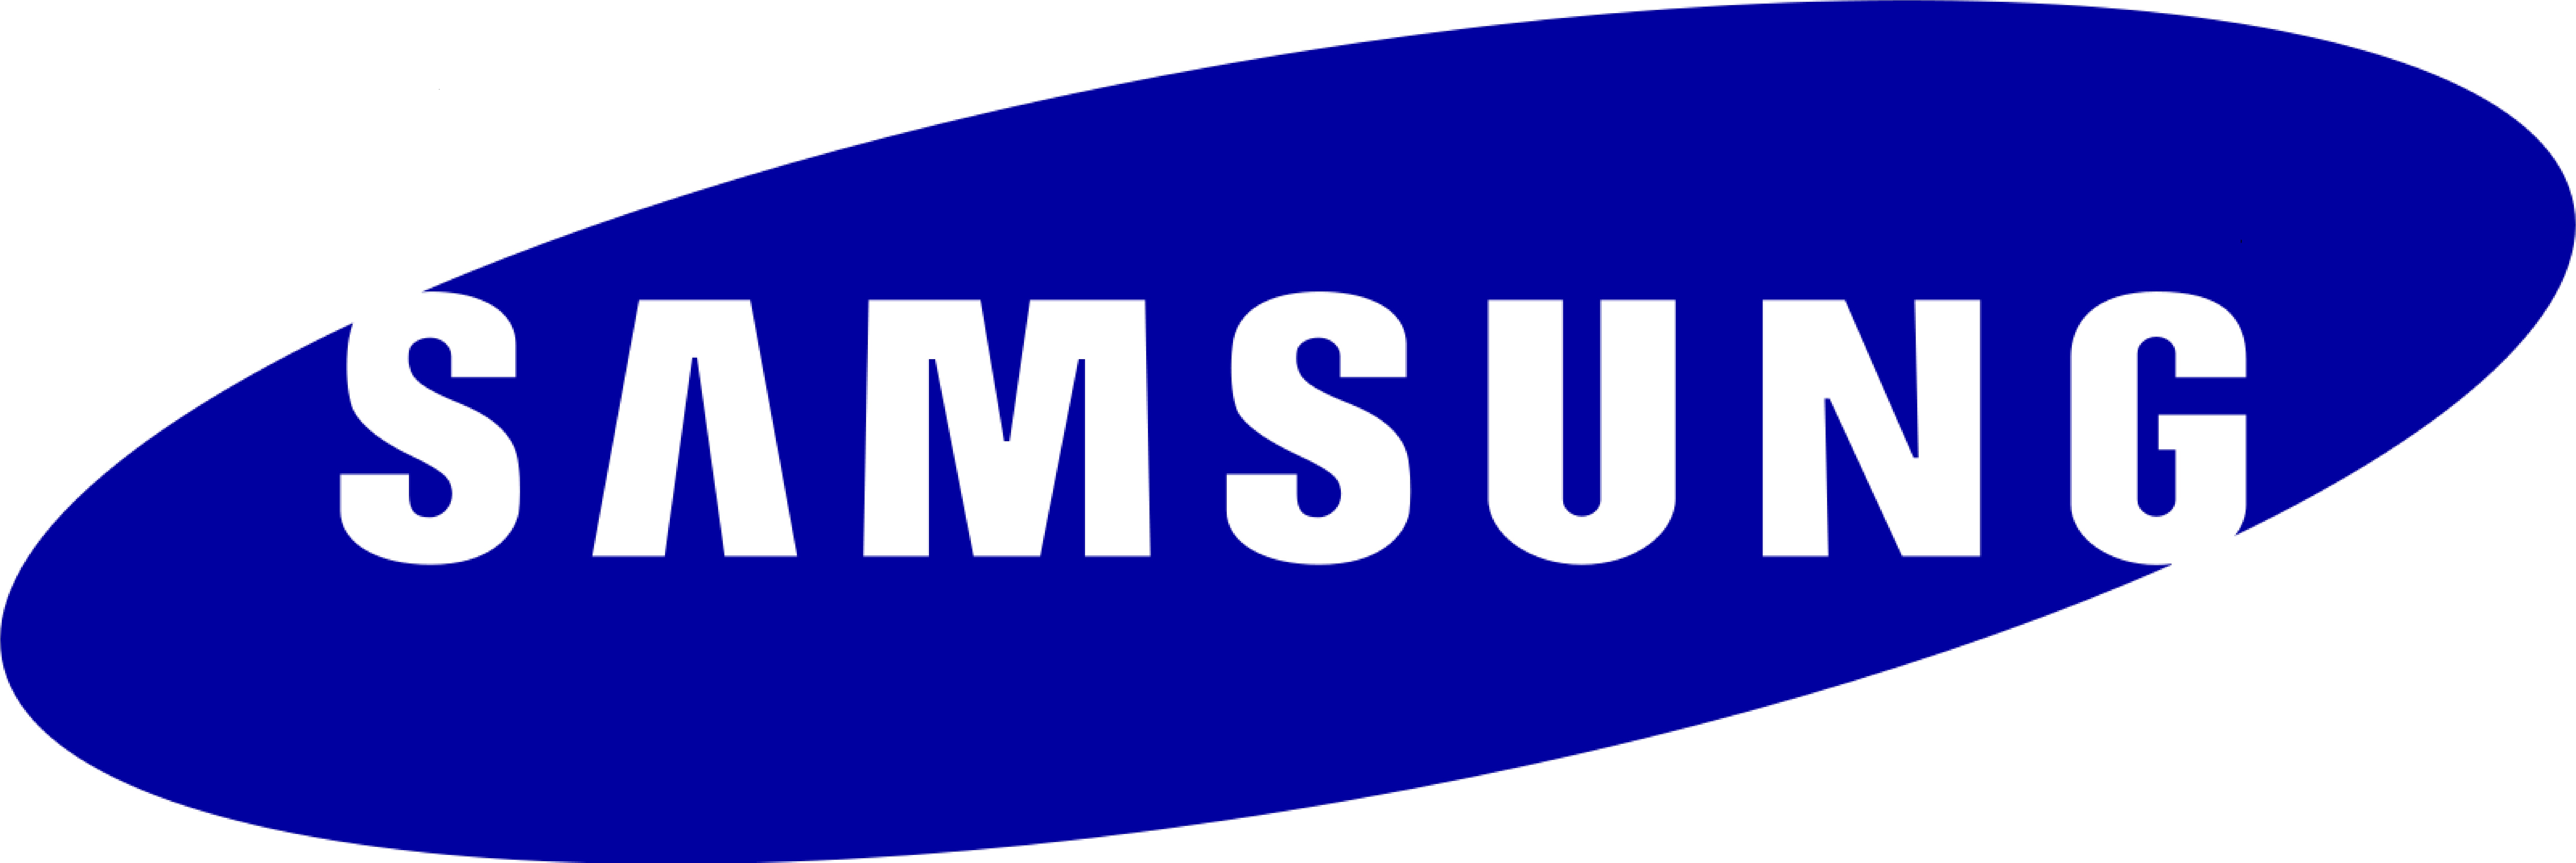 Samsung S5 Neo